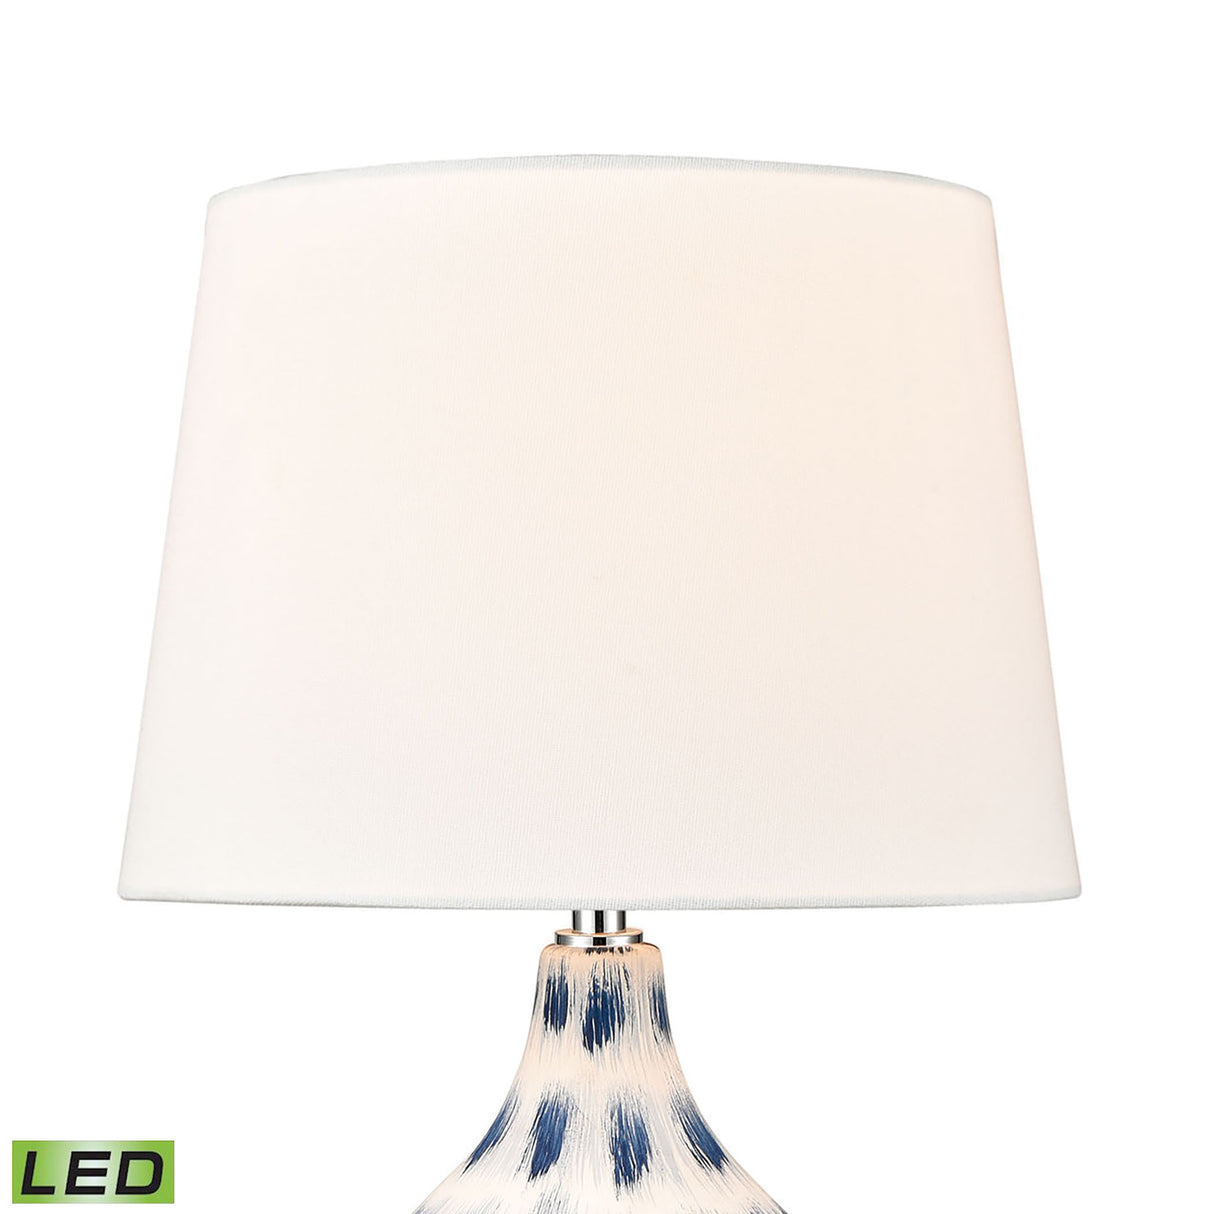 Elk S019-7270-LED Colmar 18'' High 1-Light Table Lamp - Blue - Includes LED Bulb